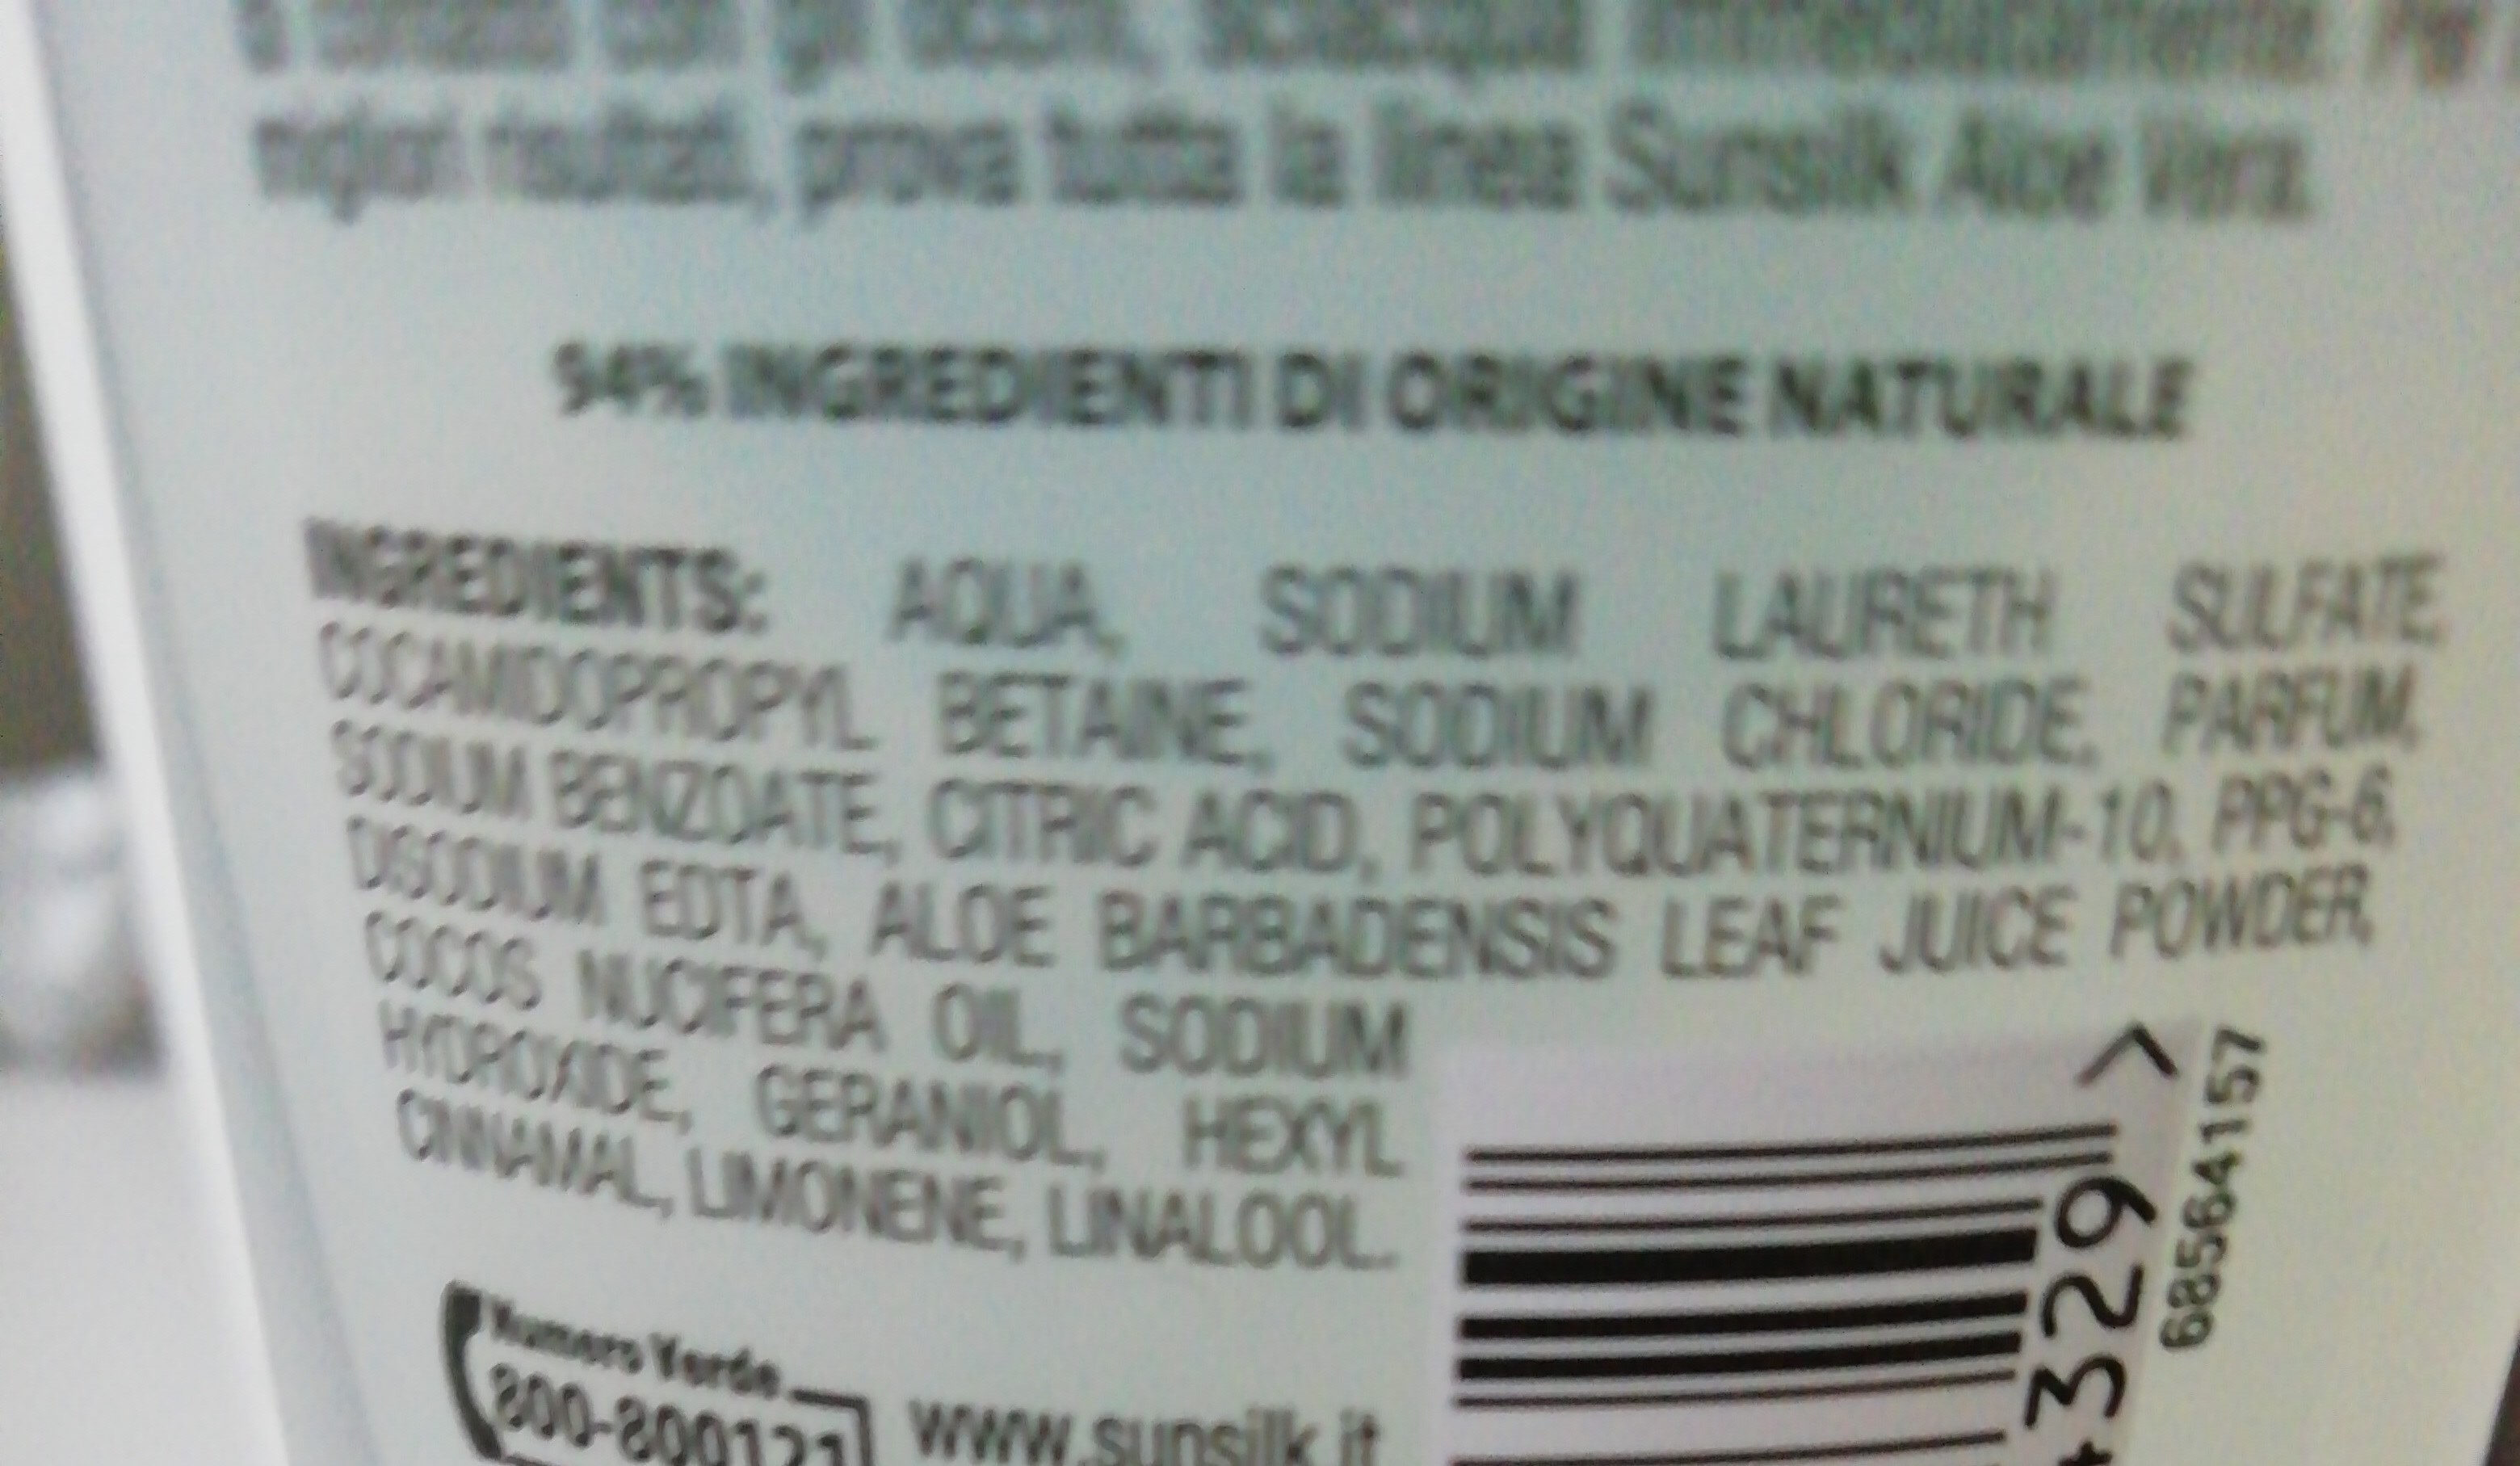 Shampoo Sunsilk Aloe Vera tutti i capelli - Ingredientes - it